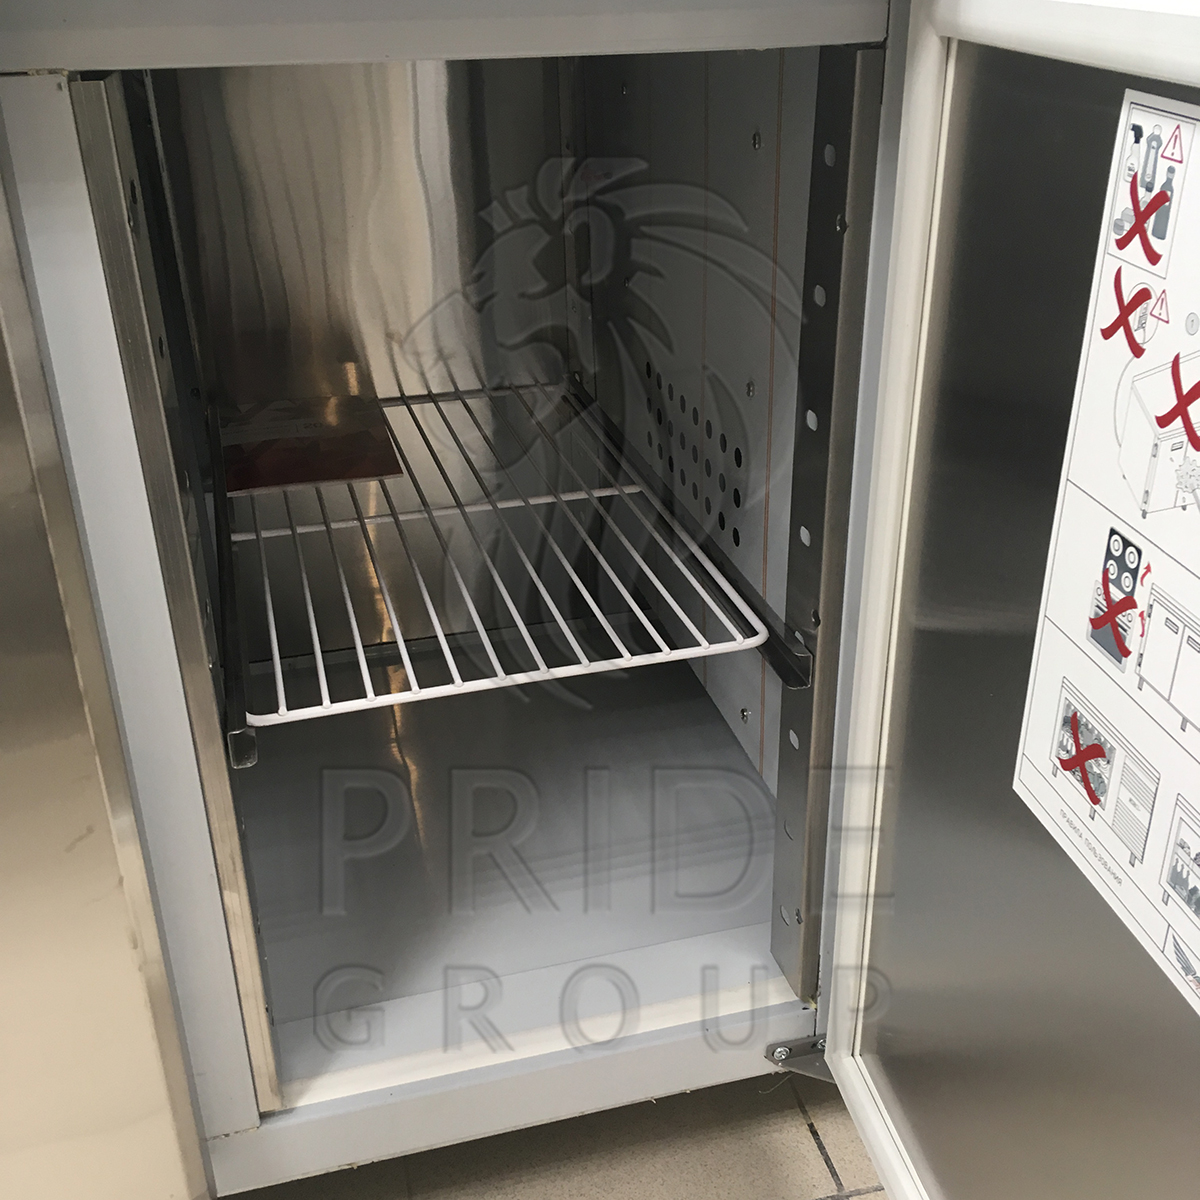 картинка Стол холодильный Finist УХС-600-3/2 универсальный 2300х600х850 мм